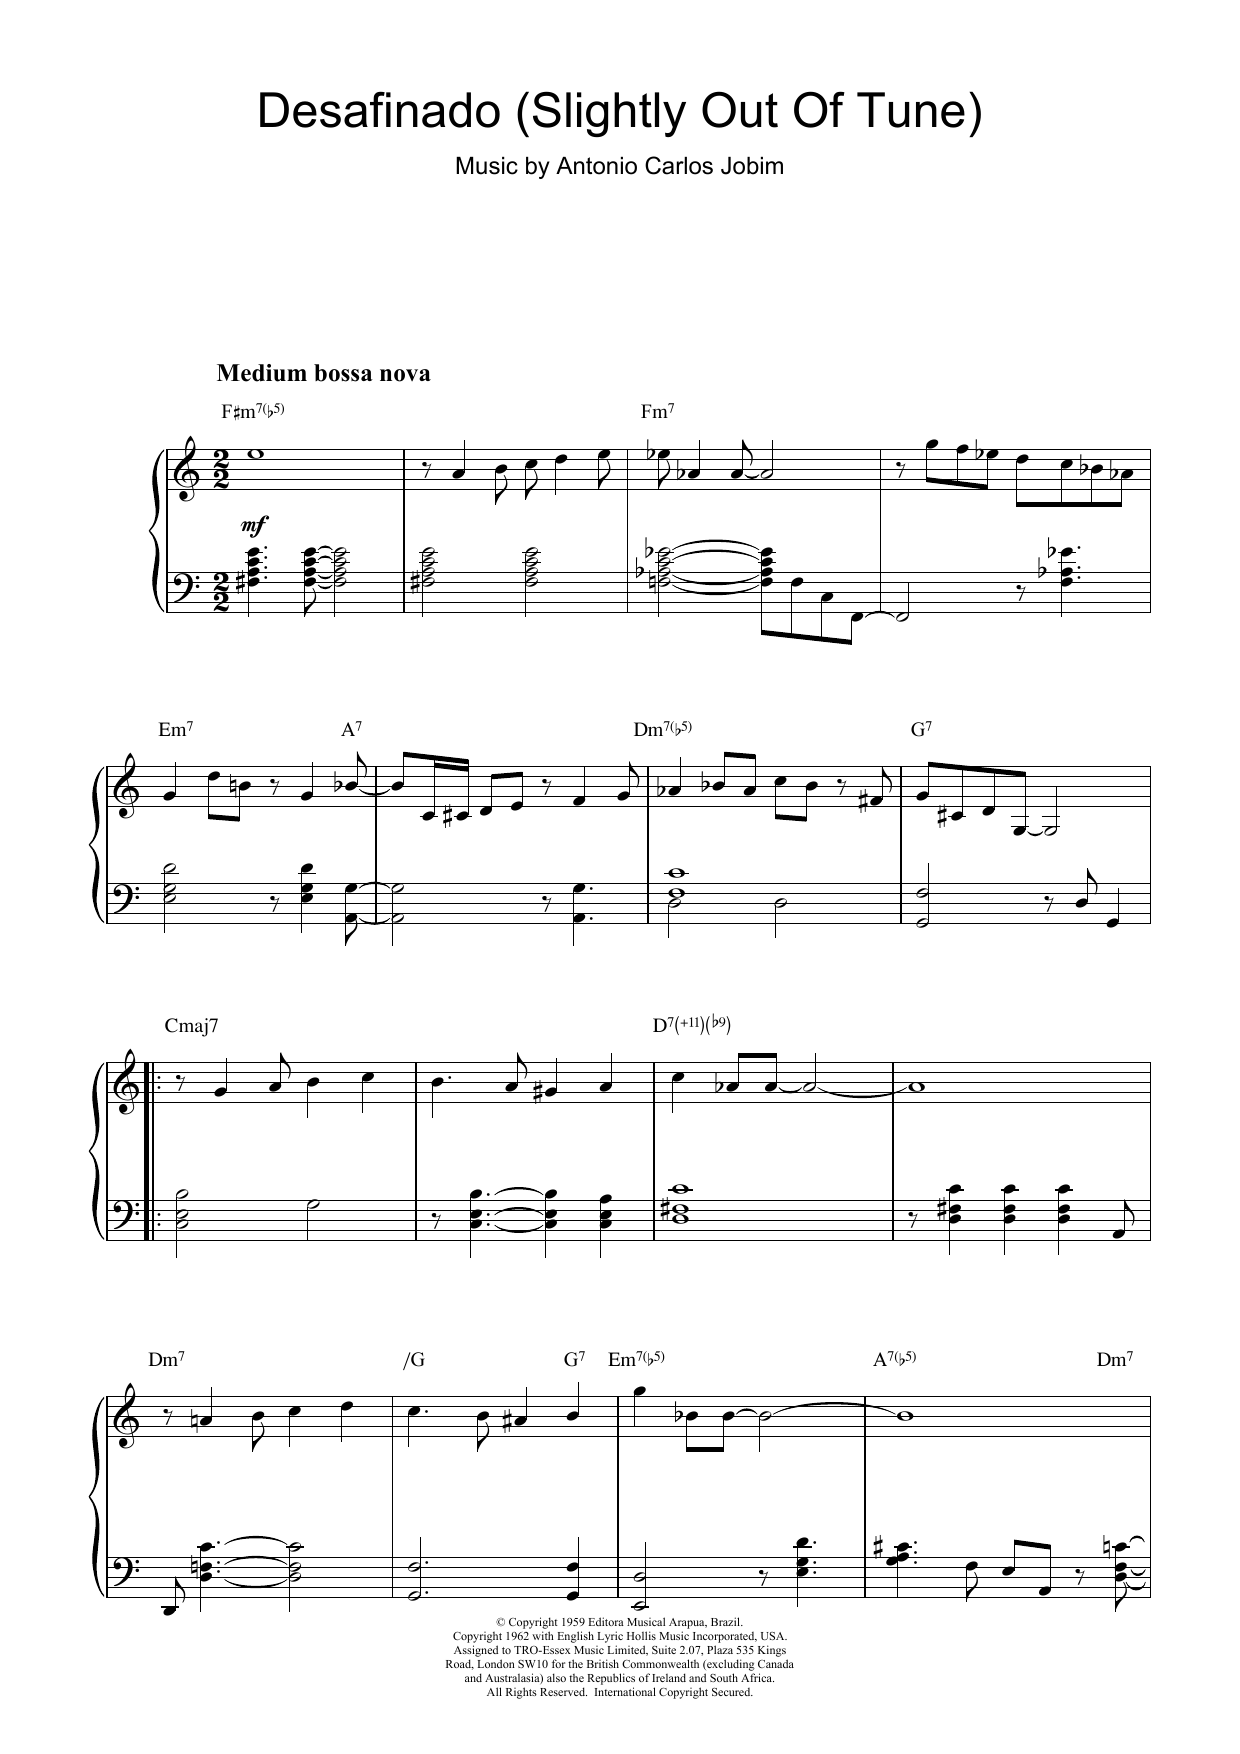 Antonio Carlos Jobim Desafinado (Slightly Out Of Tune) Sheet Music Notes & Chords for Violin - Download or Print PDF